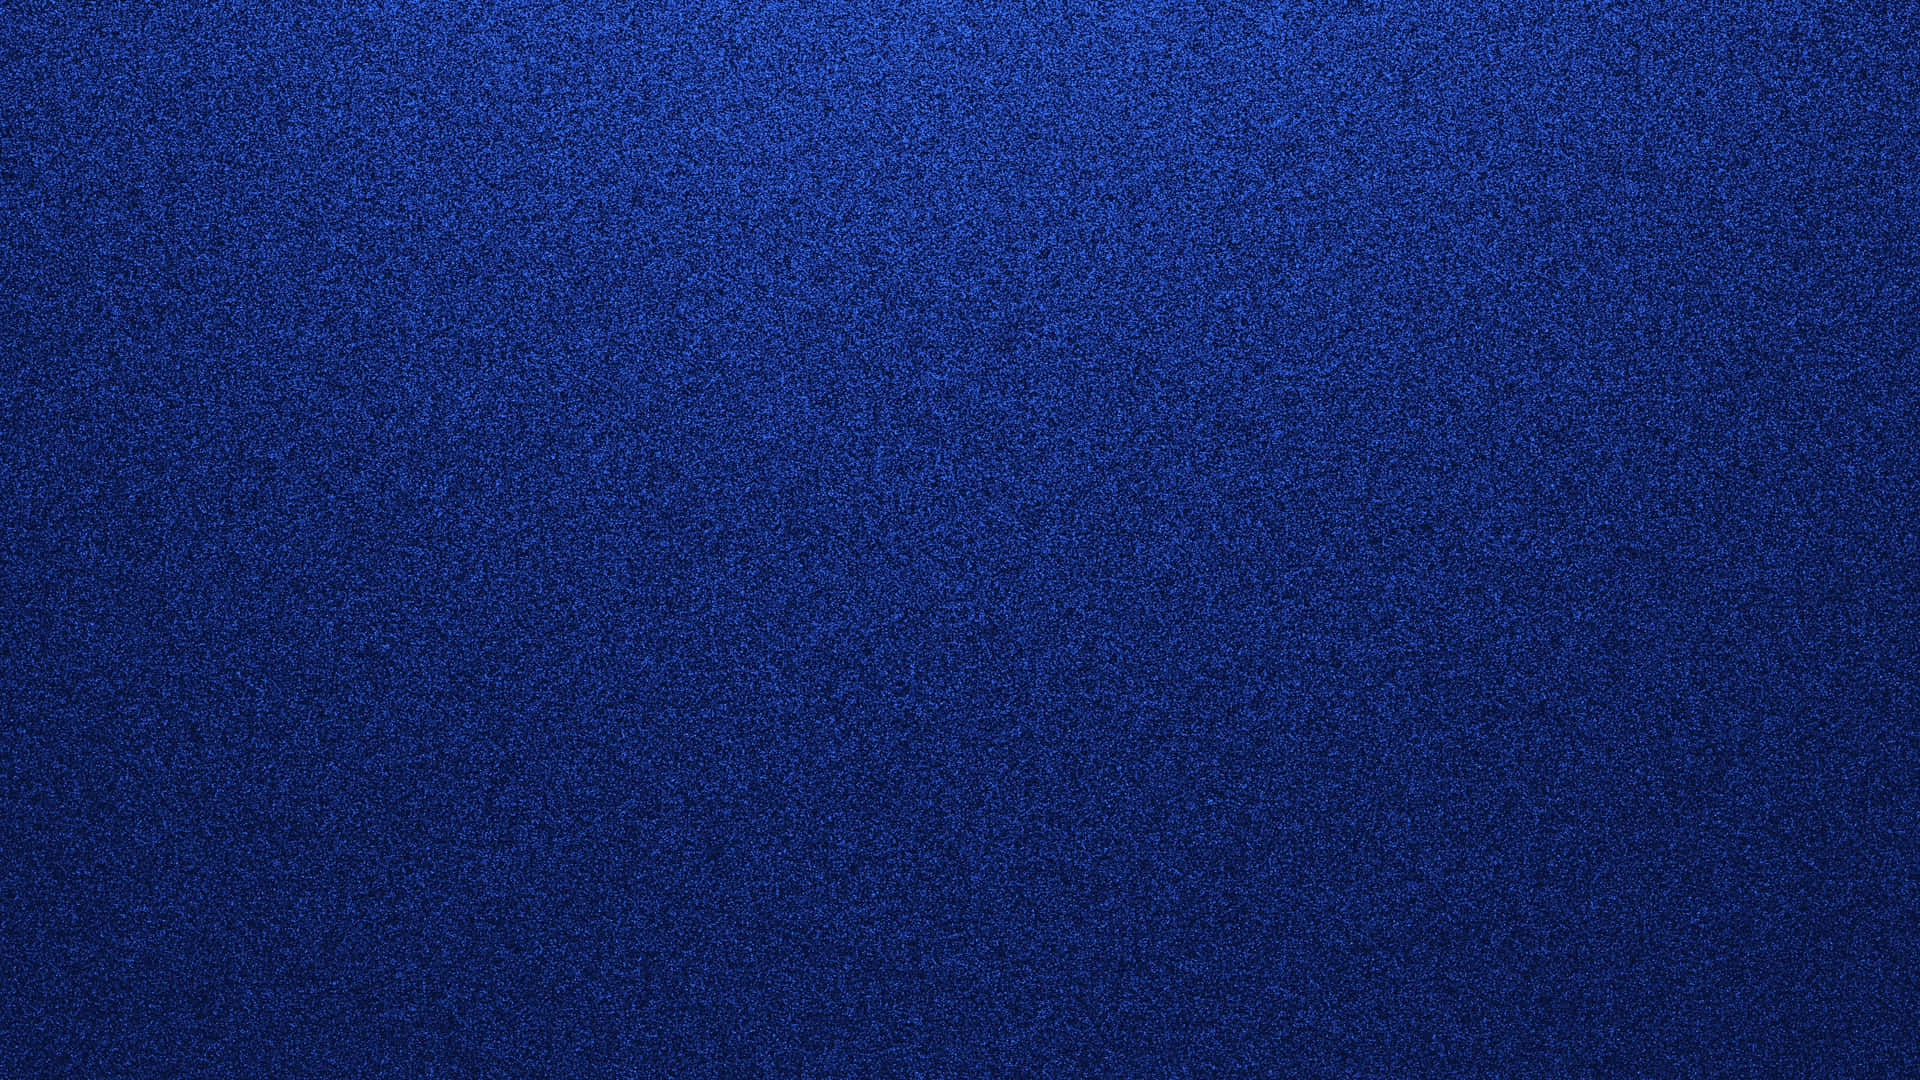 Imagensde Textura De Areia Azul.